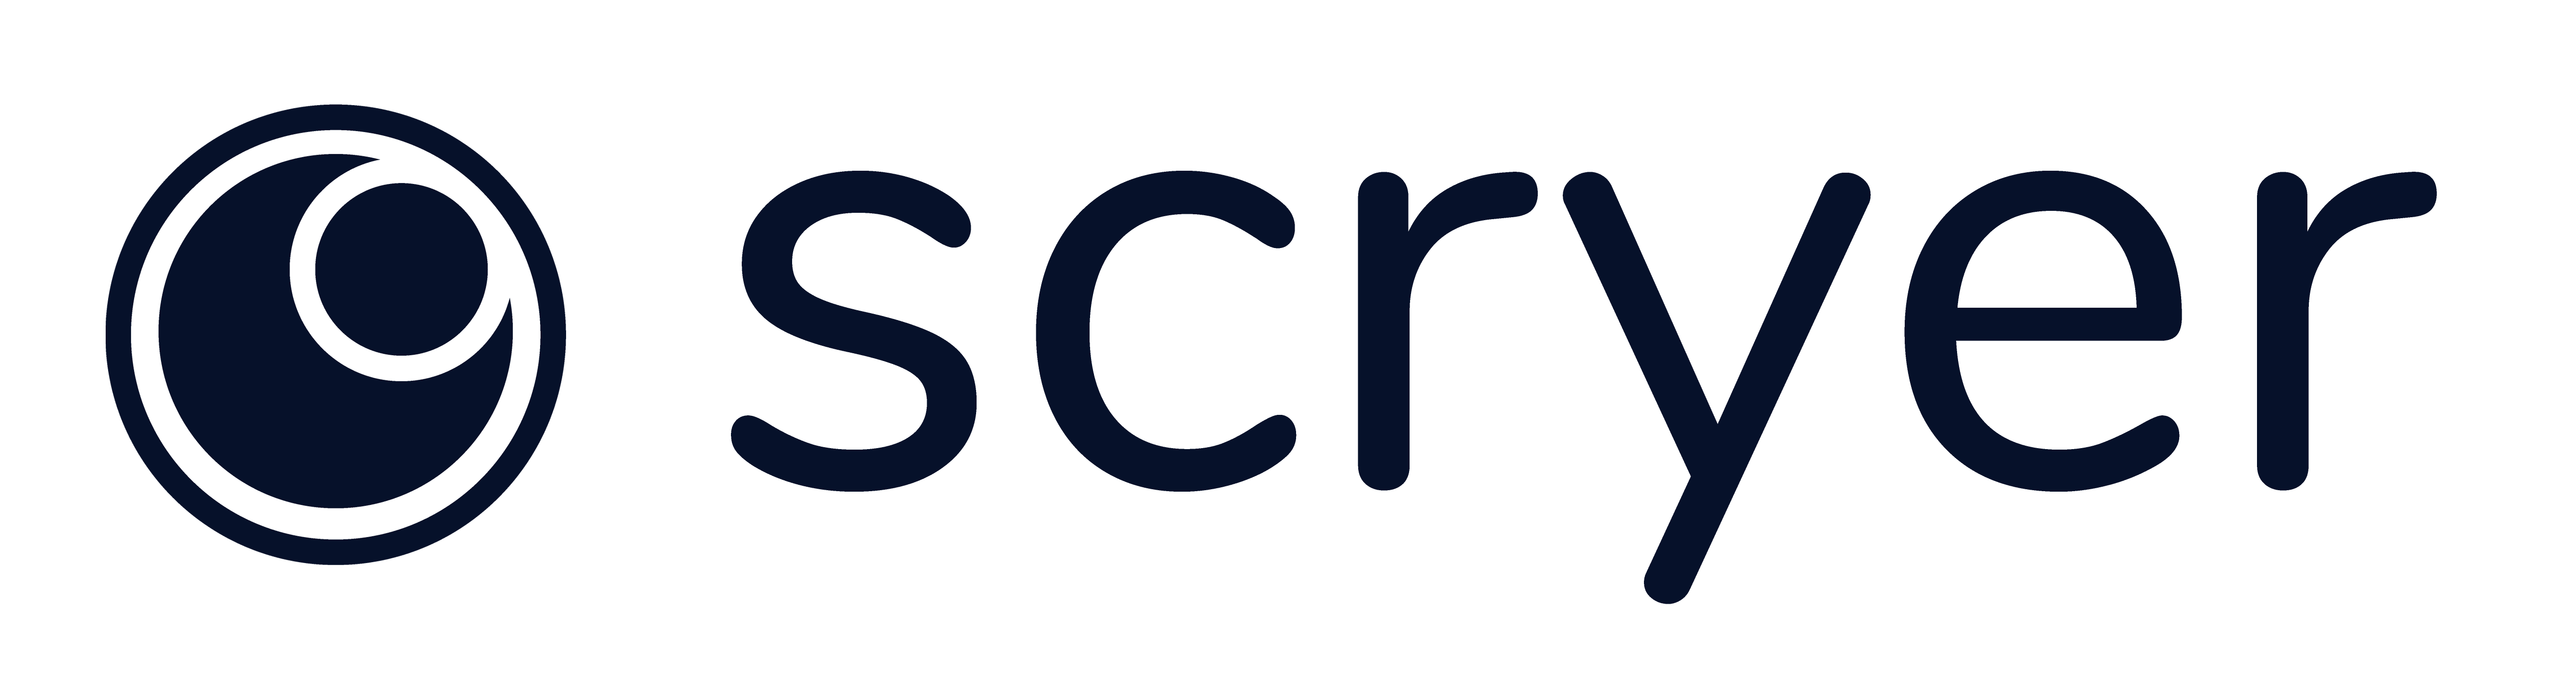 scryer-logo-transparent